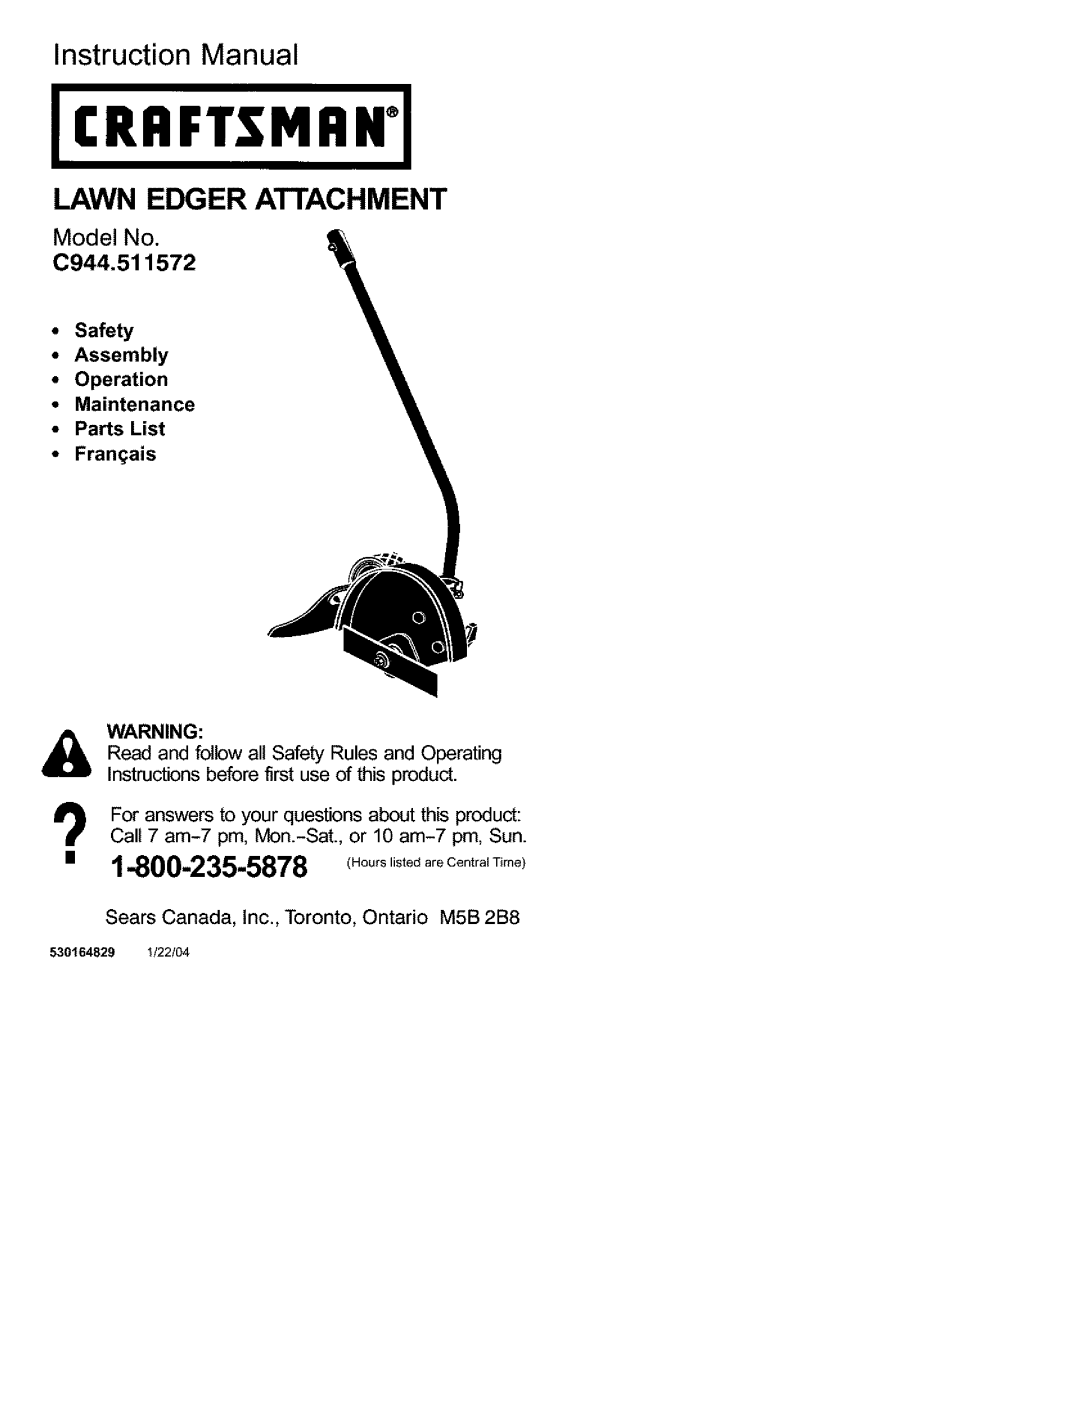 Craftsman C944.511572 instruction manual Safety Assembly Operation Maintenance, Parts List Fran ais, Lawn Edger Attachment 